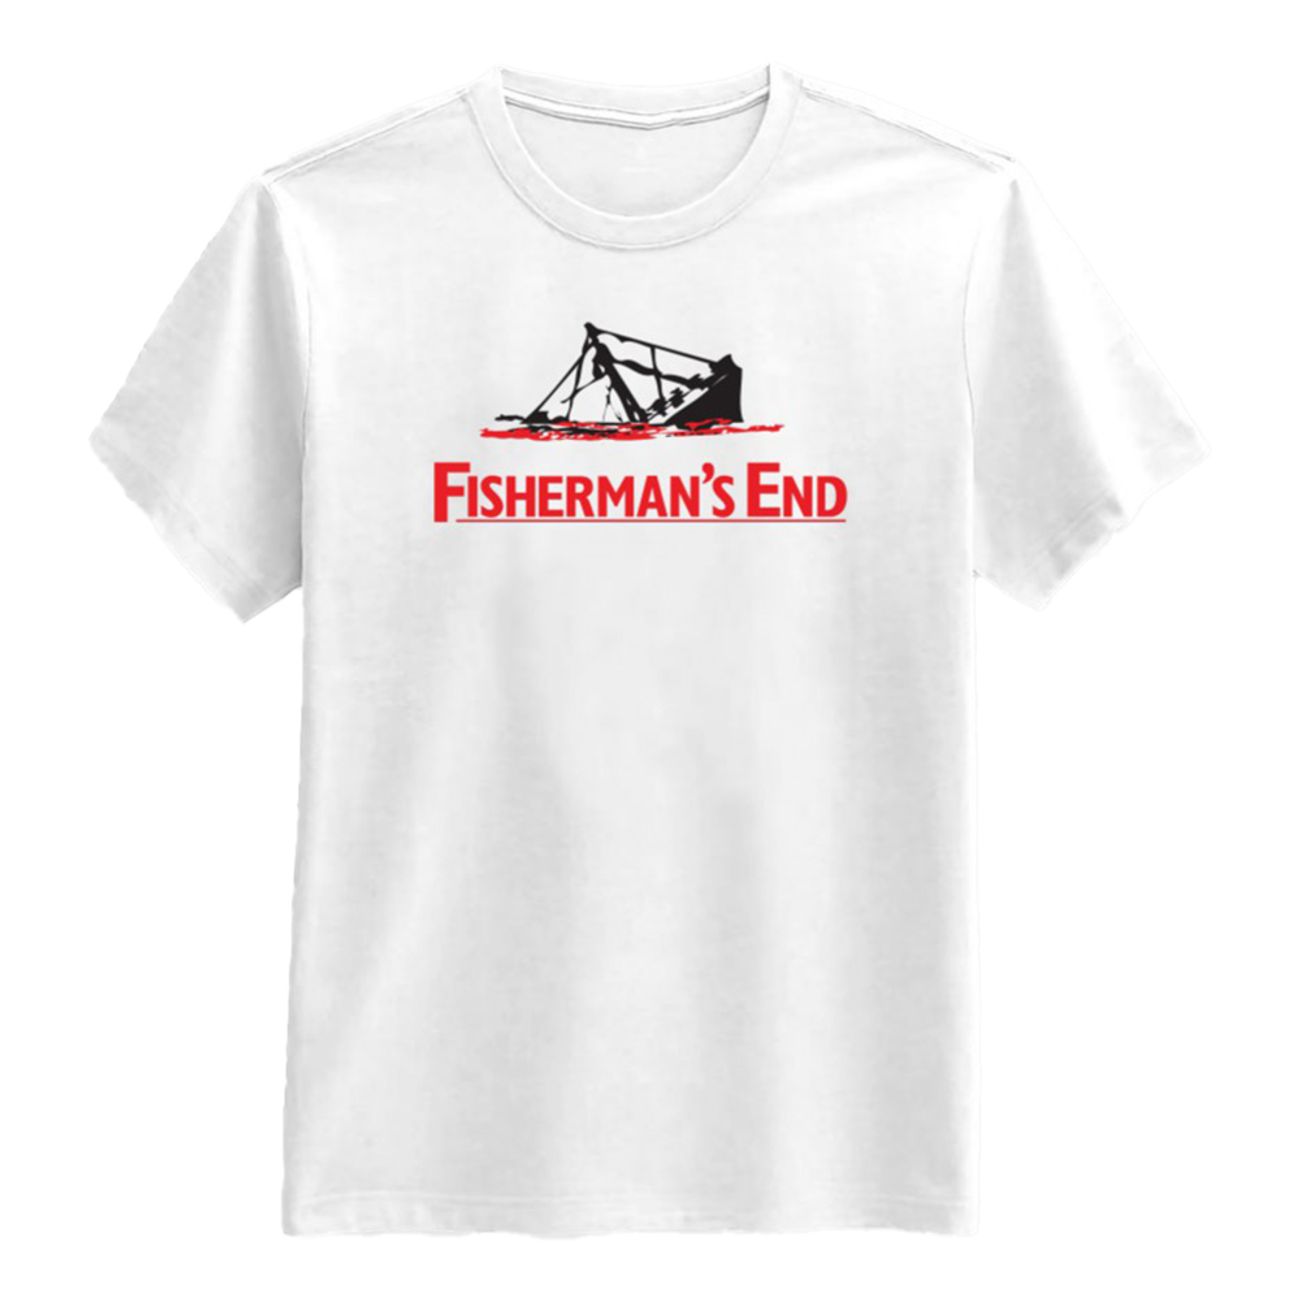 fishermans-end-t-shirt-1